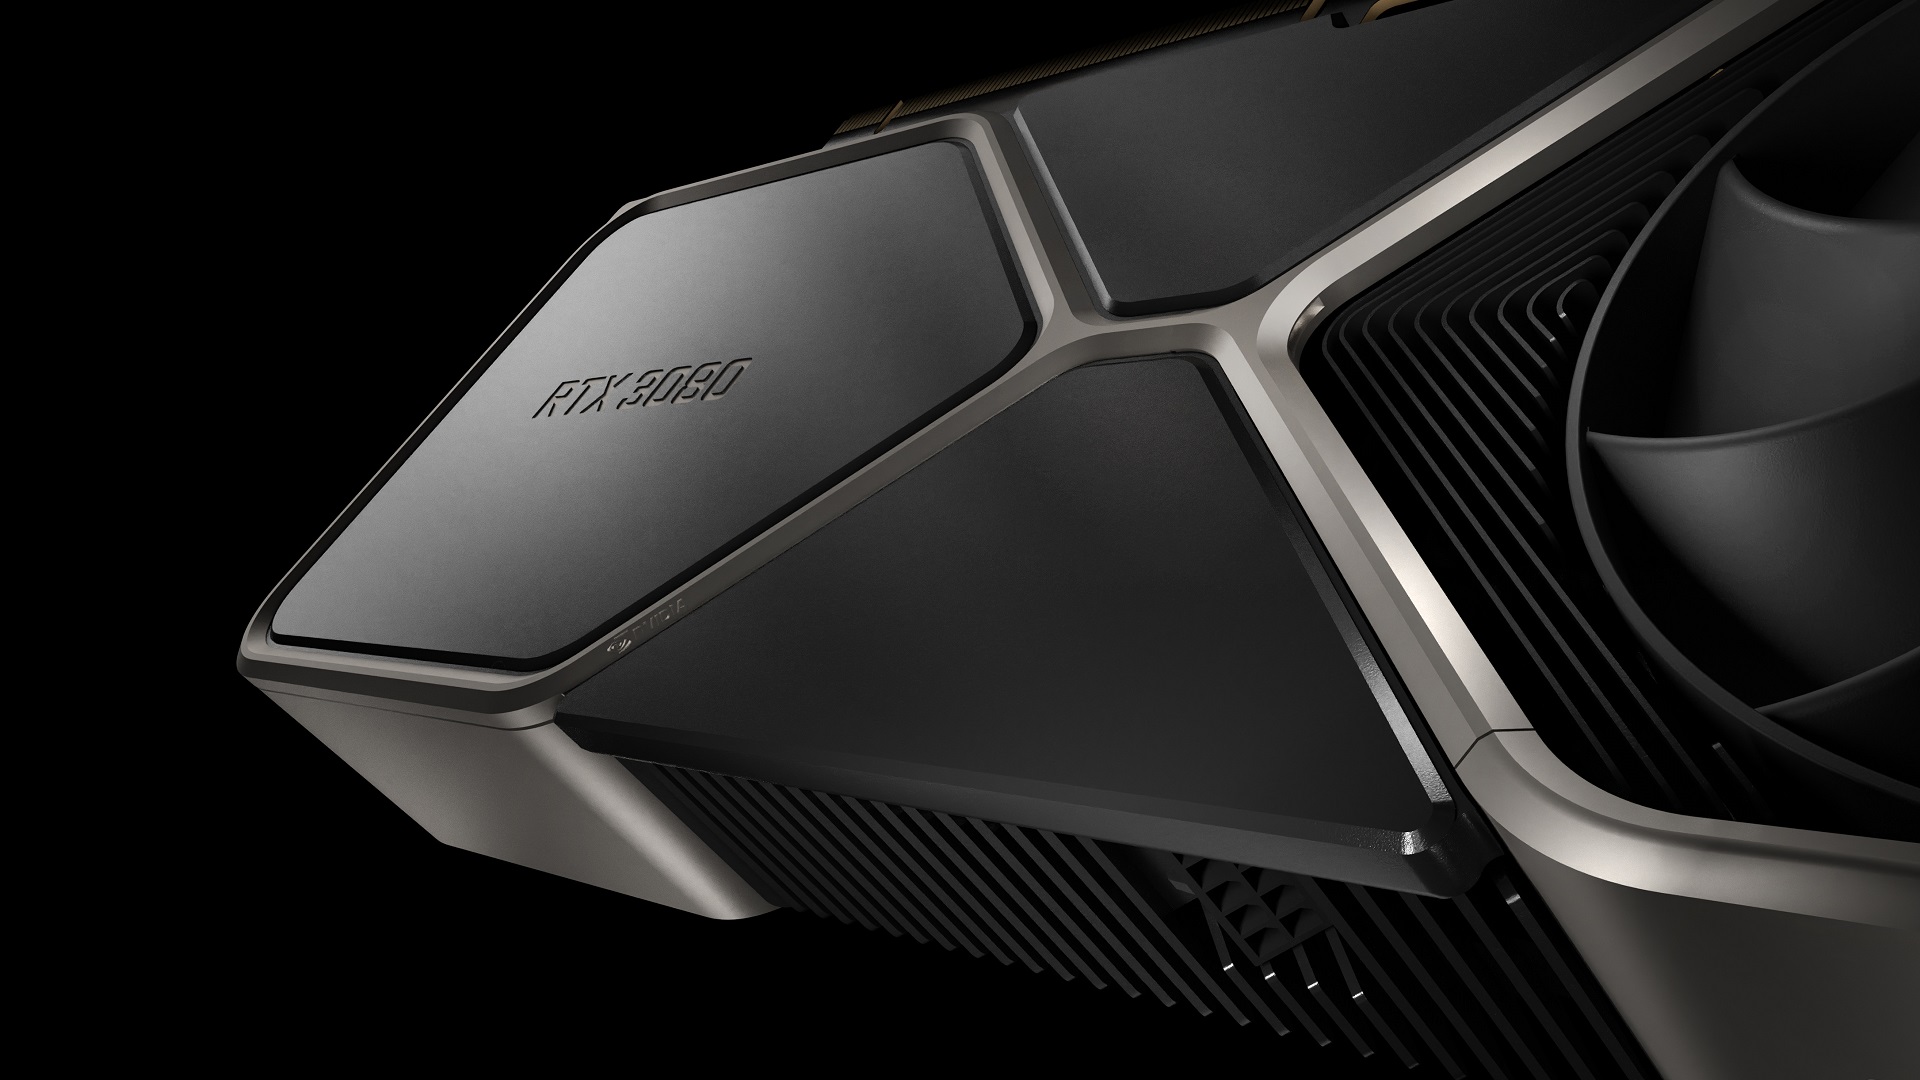 Geforce Rtx 3080 Is Nvidia’s New Flagship Next Gen Gpu